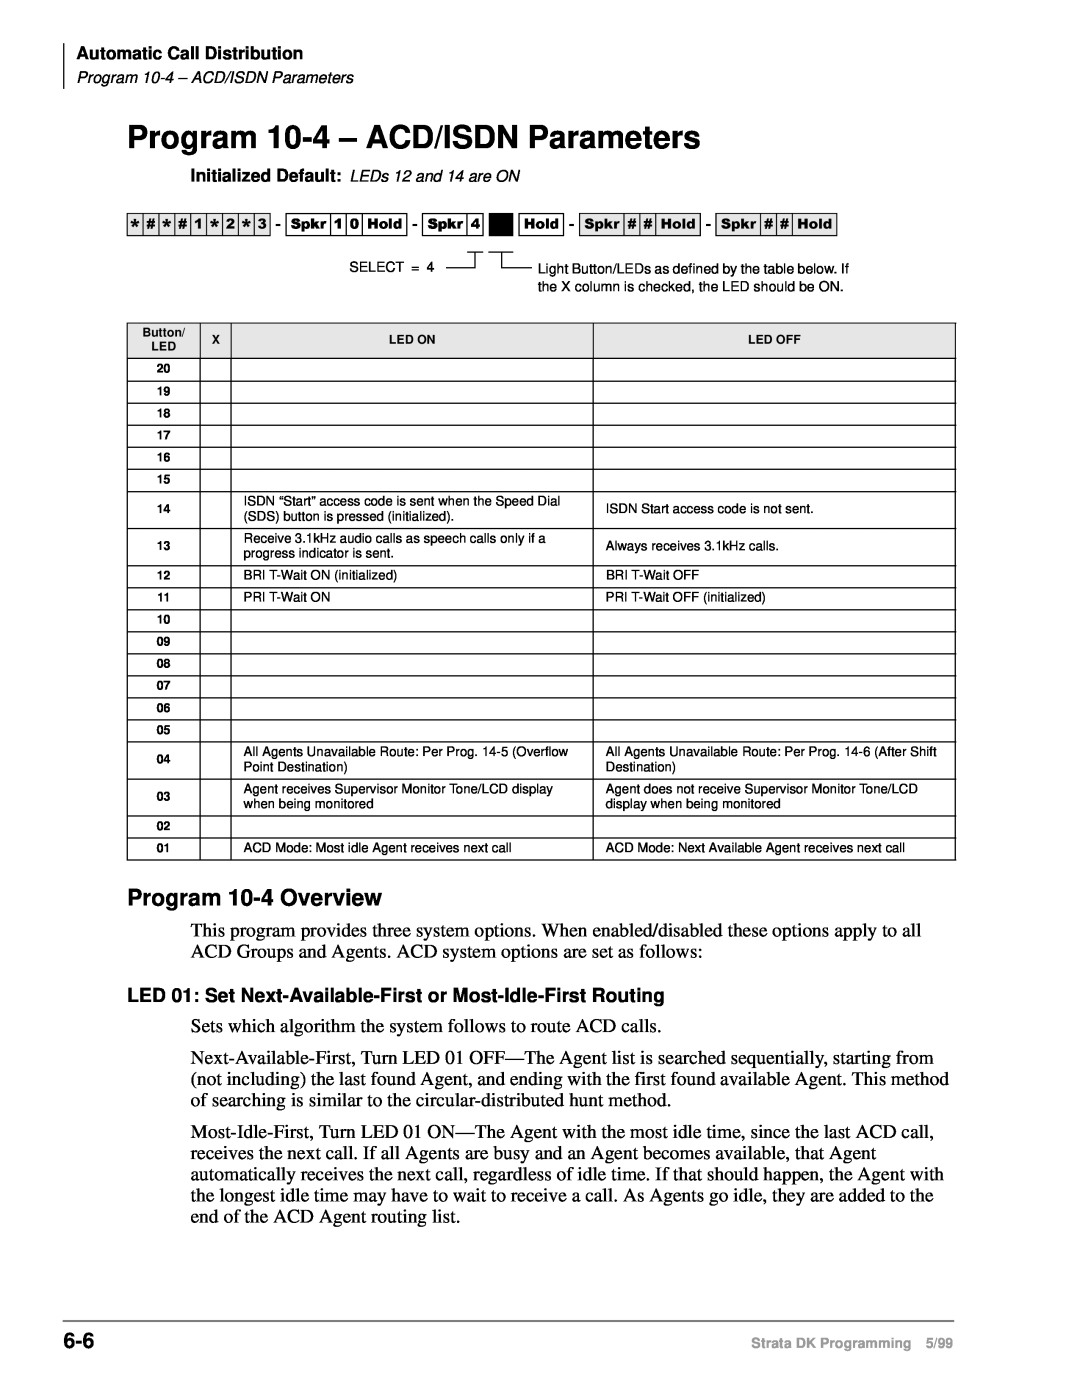 Toshiba dk14 manual Program 10-4– ACD/ISDN Parameters, Program 10-4Overview 